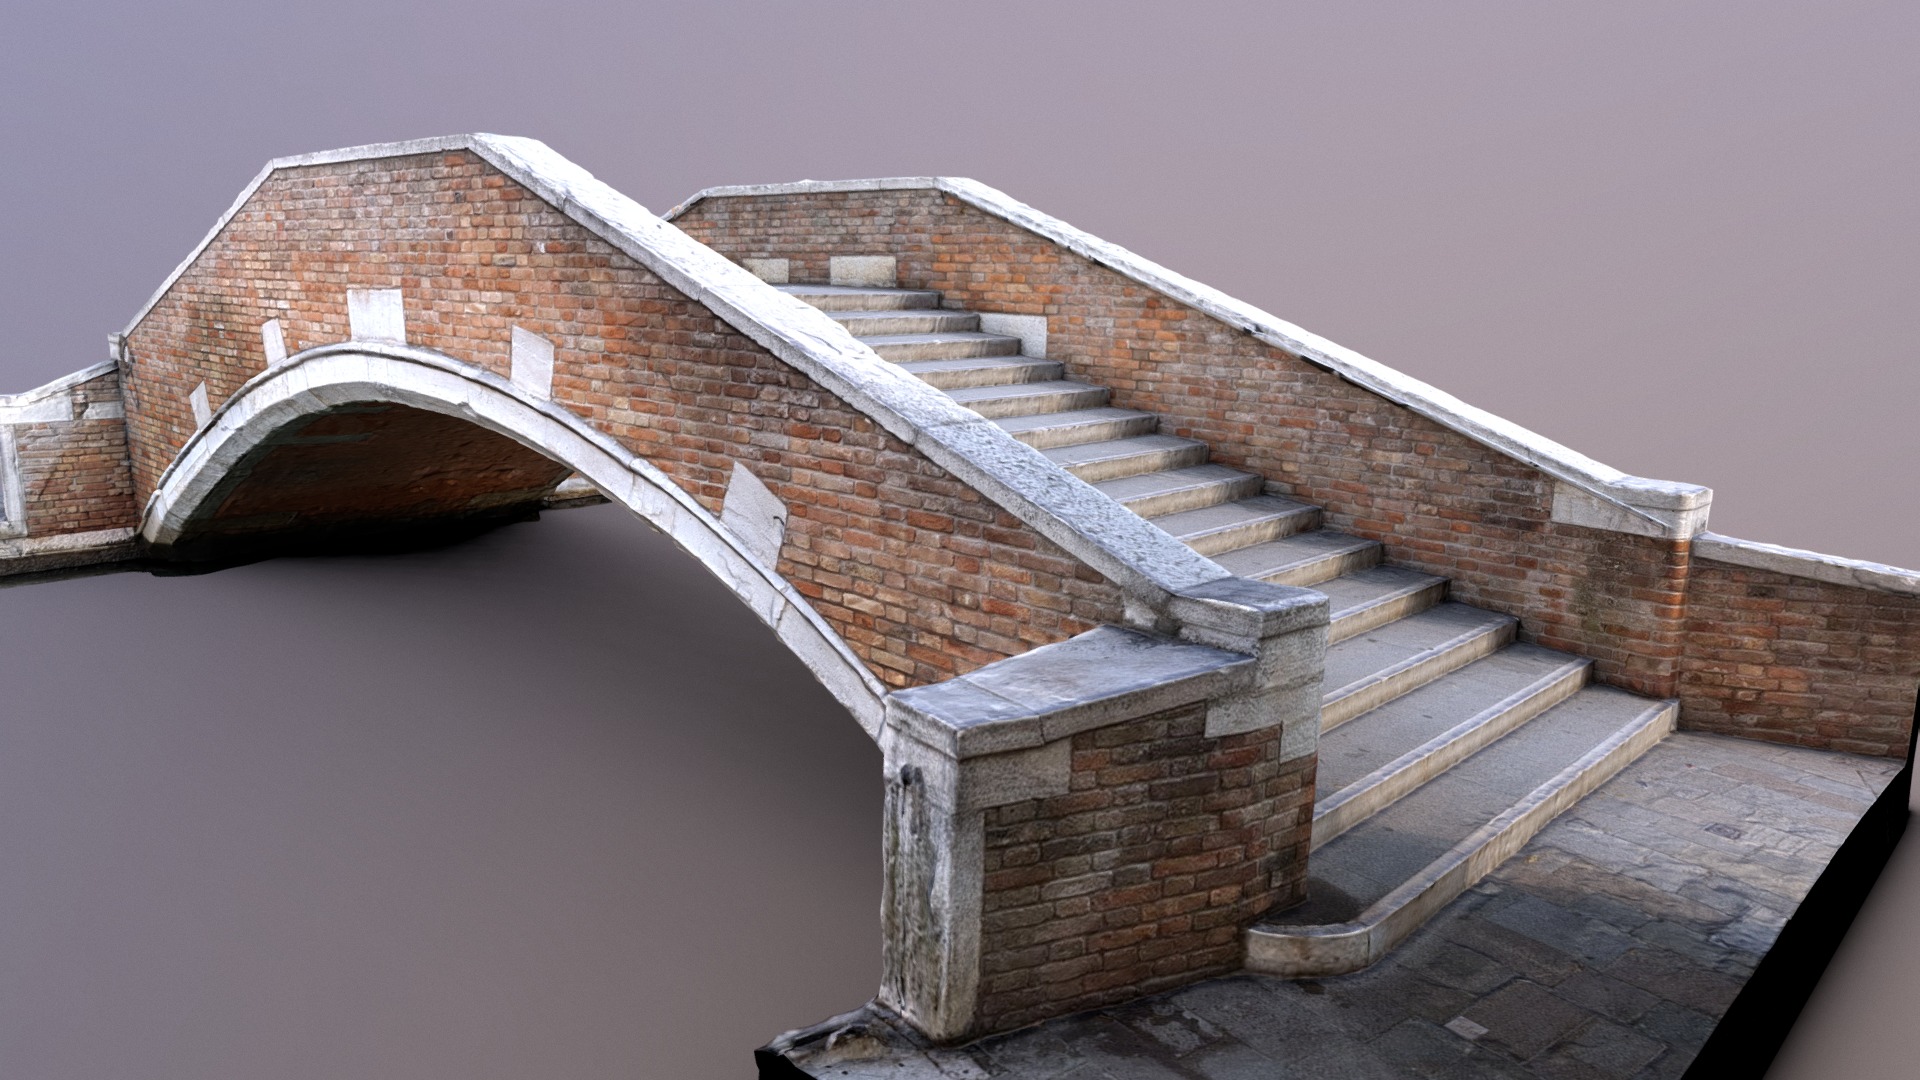 3D model Bridge Ponte De Ca’ Marcello, Venice, Italy - This is a 3D model of the Bridge Ponte De Ca' Marcello, Venice, Italy. The 3D model is about a brick building with a staircase.